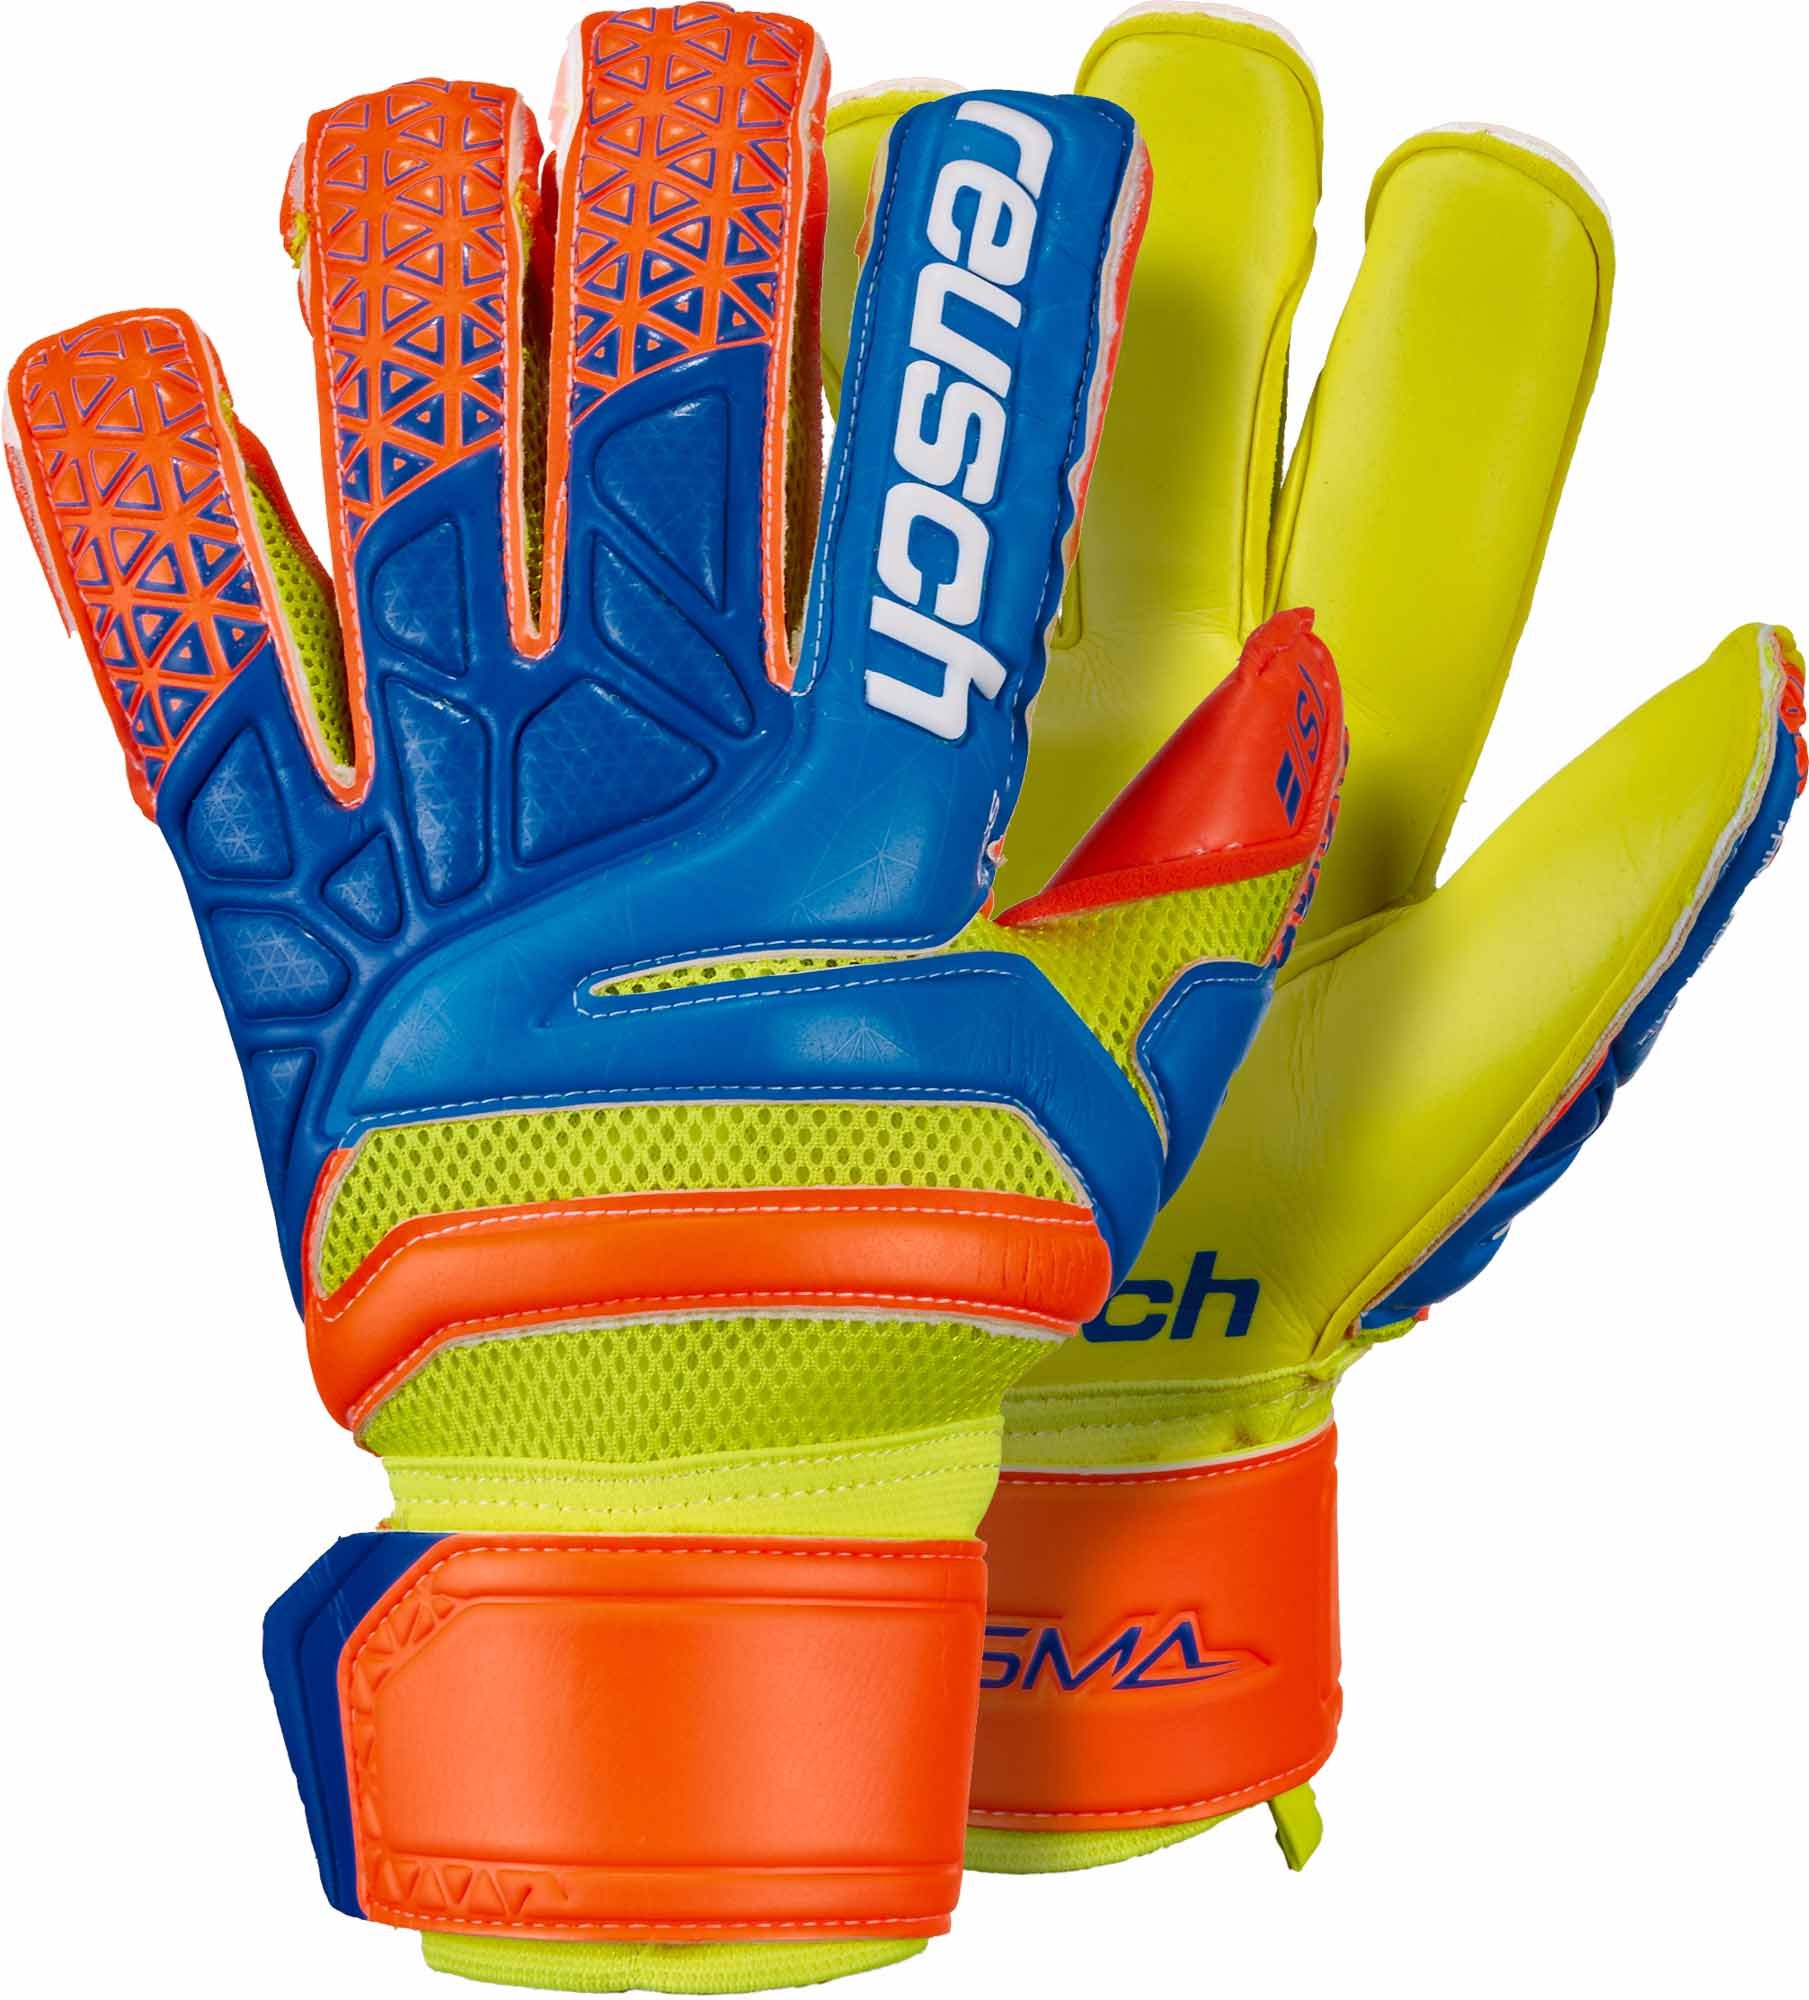 Reusch Prisma Prime G3 Finger Support Goalkeeper Gloves 